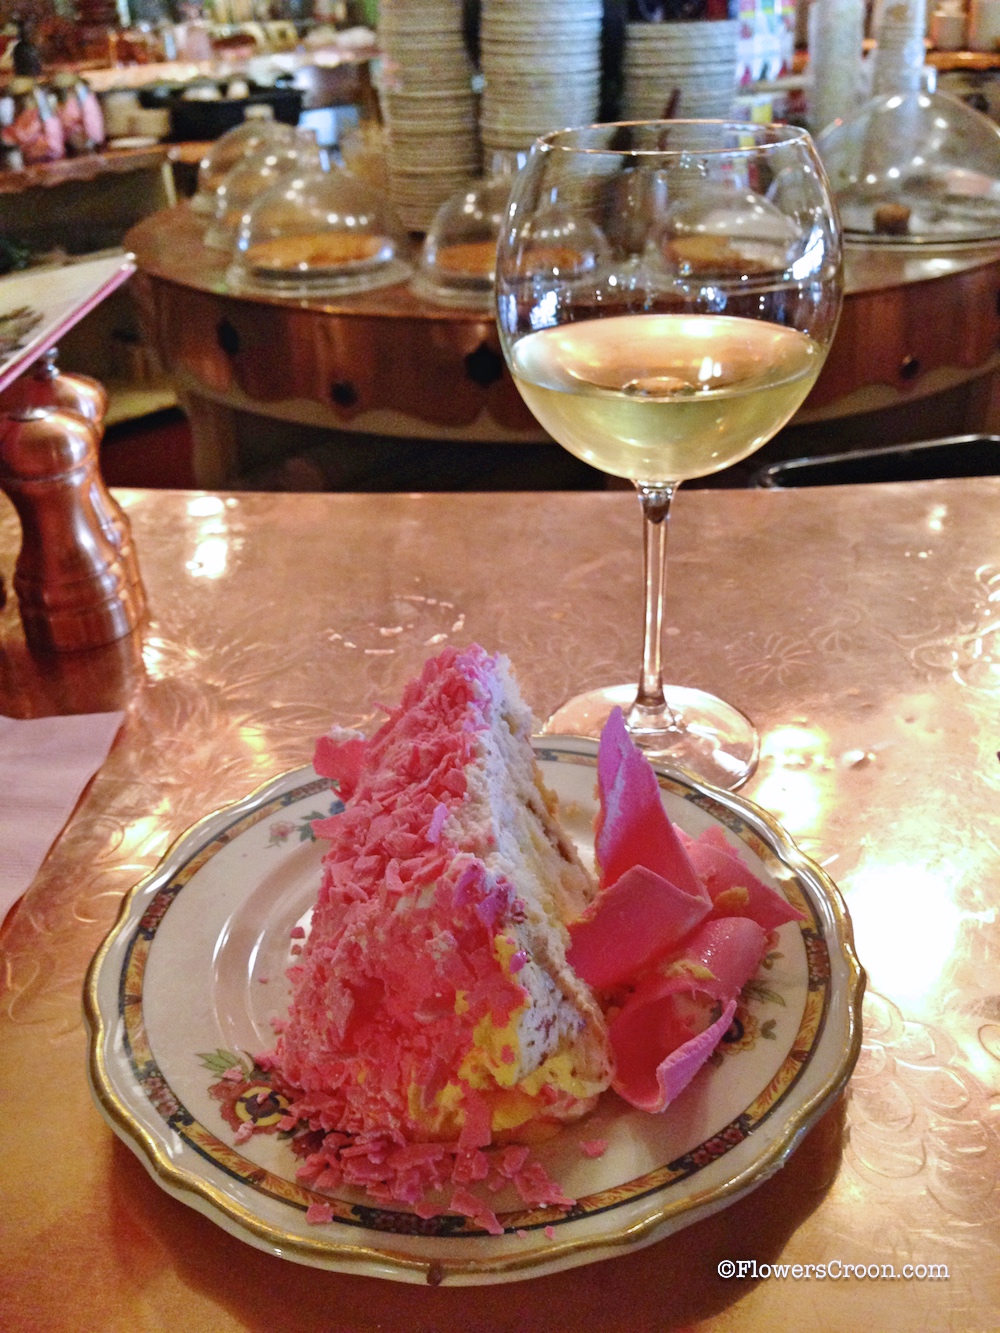 Madonna Inn Pink Champagne Cake — flowers croon